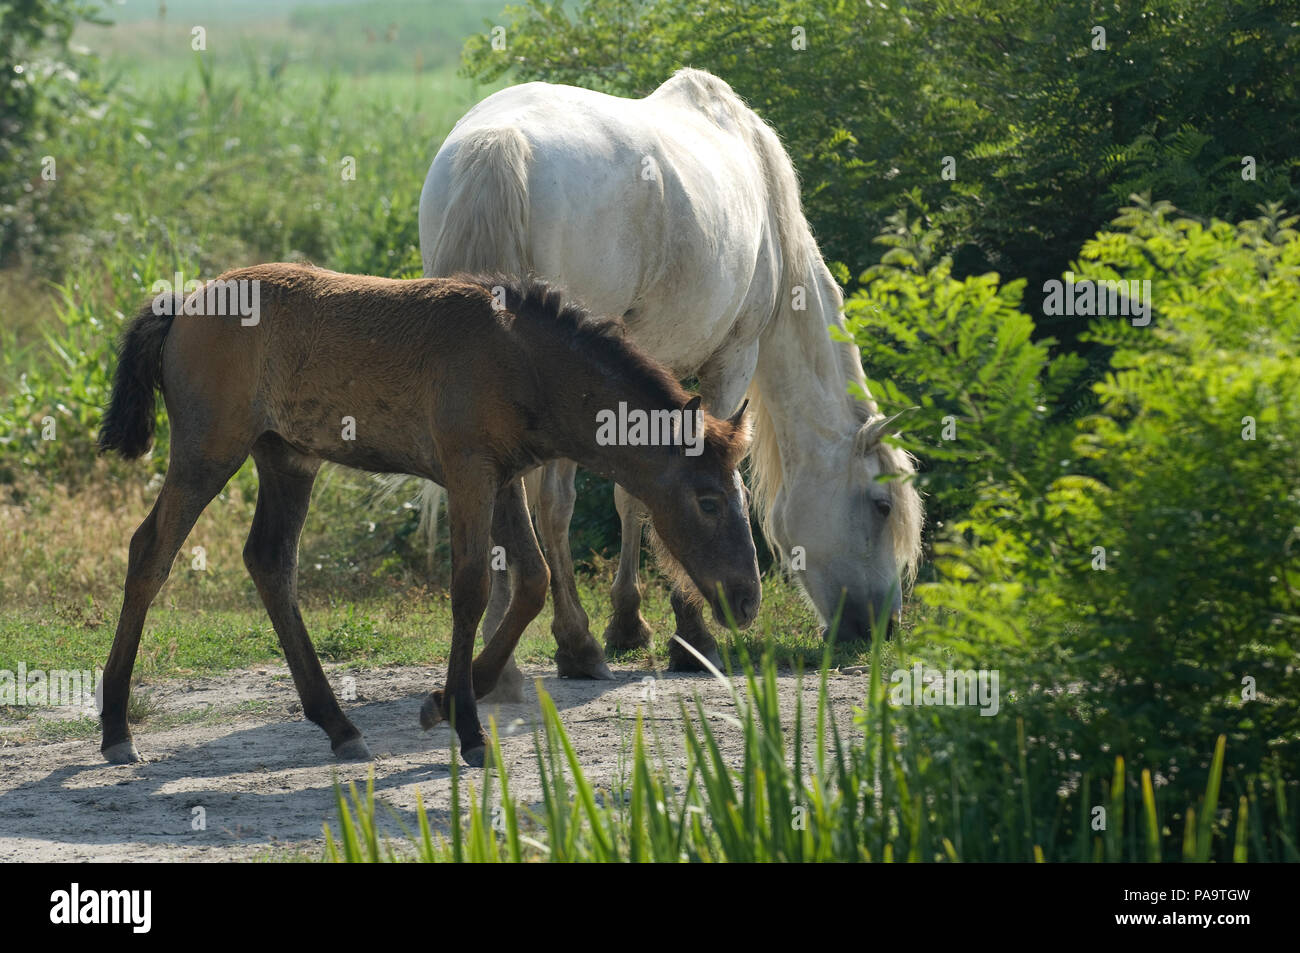 Cheval Camargue - poulain et jument - Wild Horse of Camargue - foal and mare - Equus caballus Stock Photo